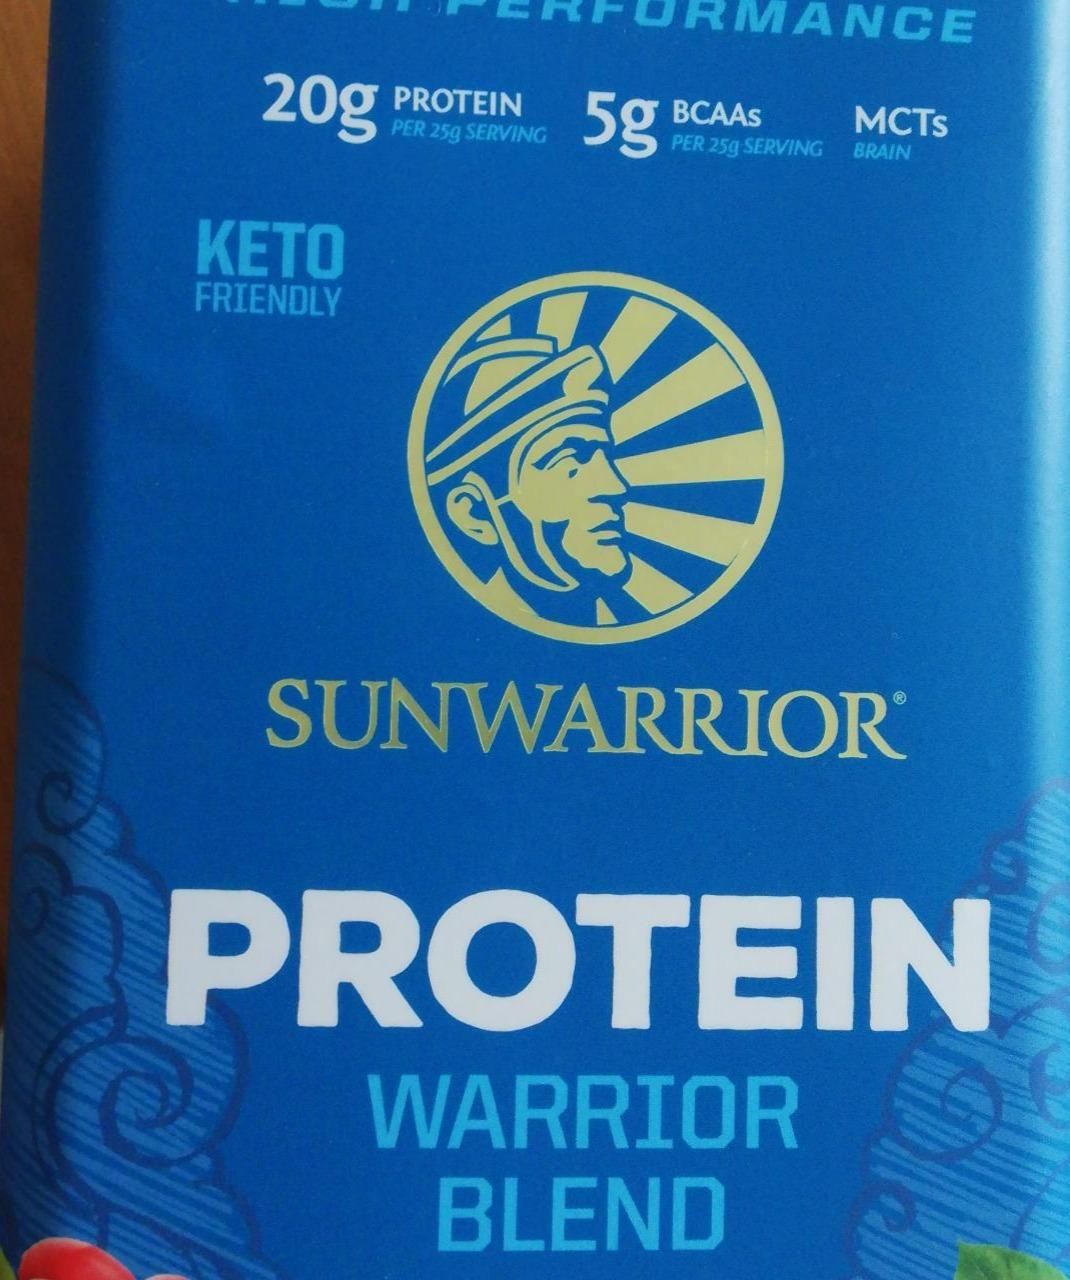 Fotografie - Sunwarrior protein warrior blend natural